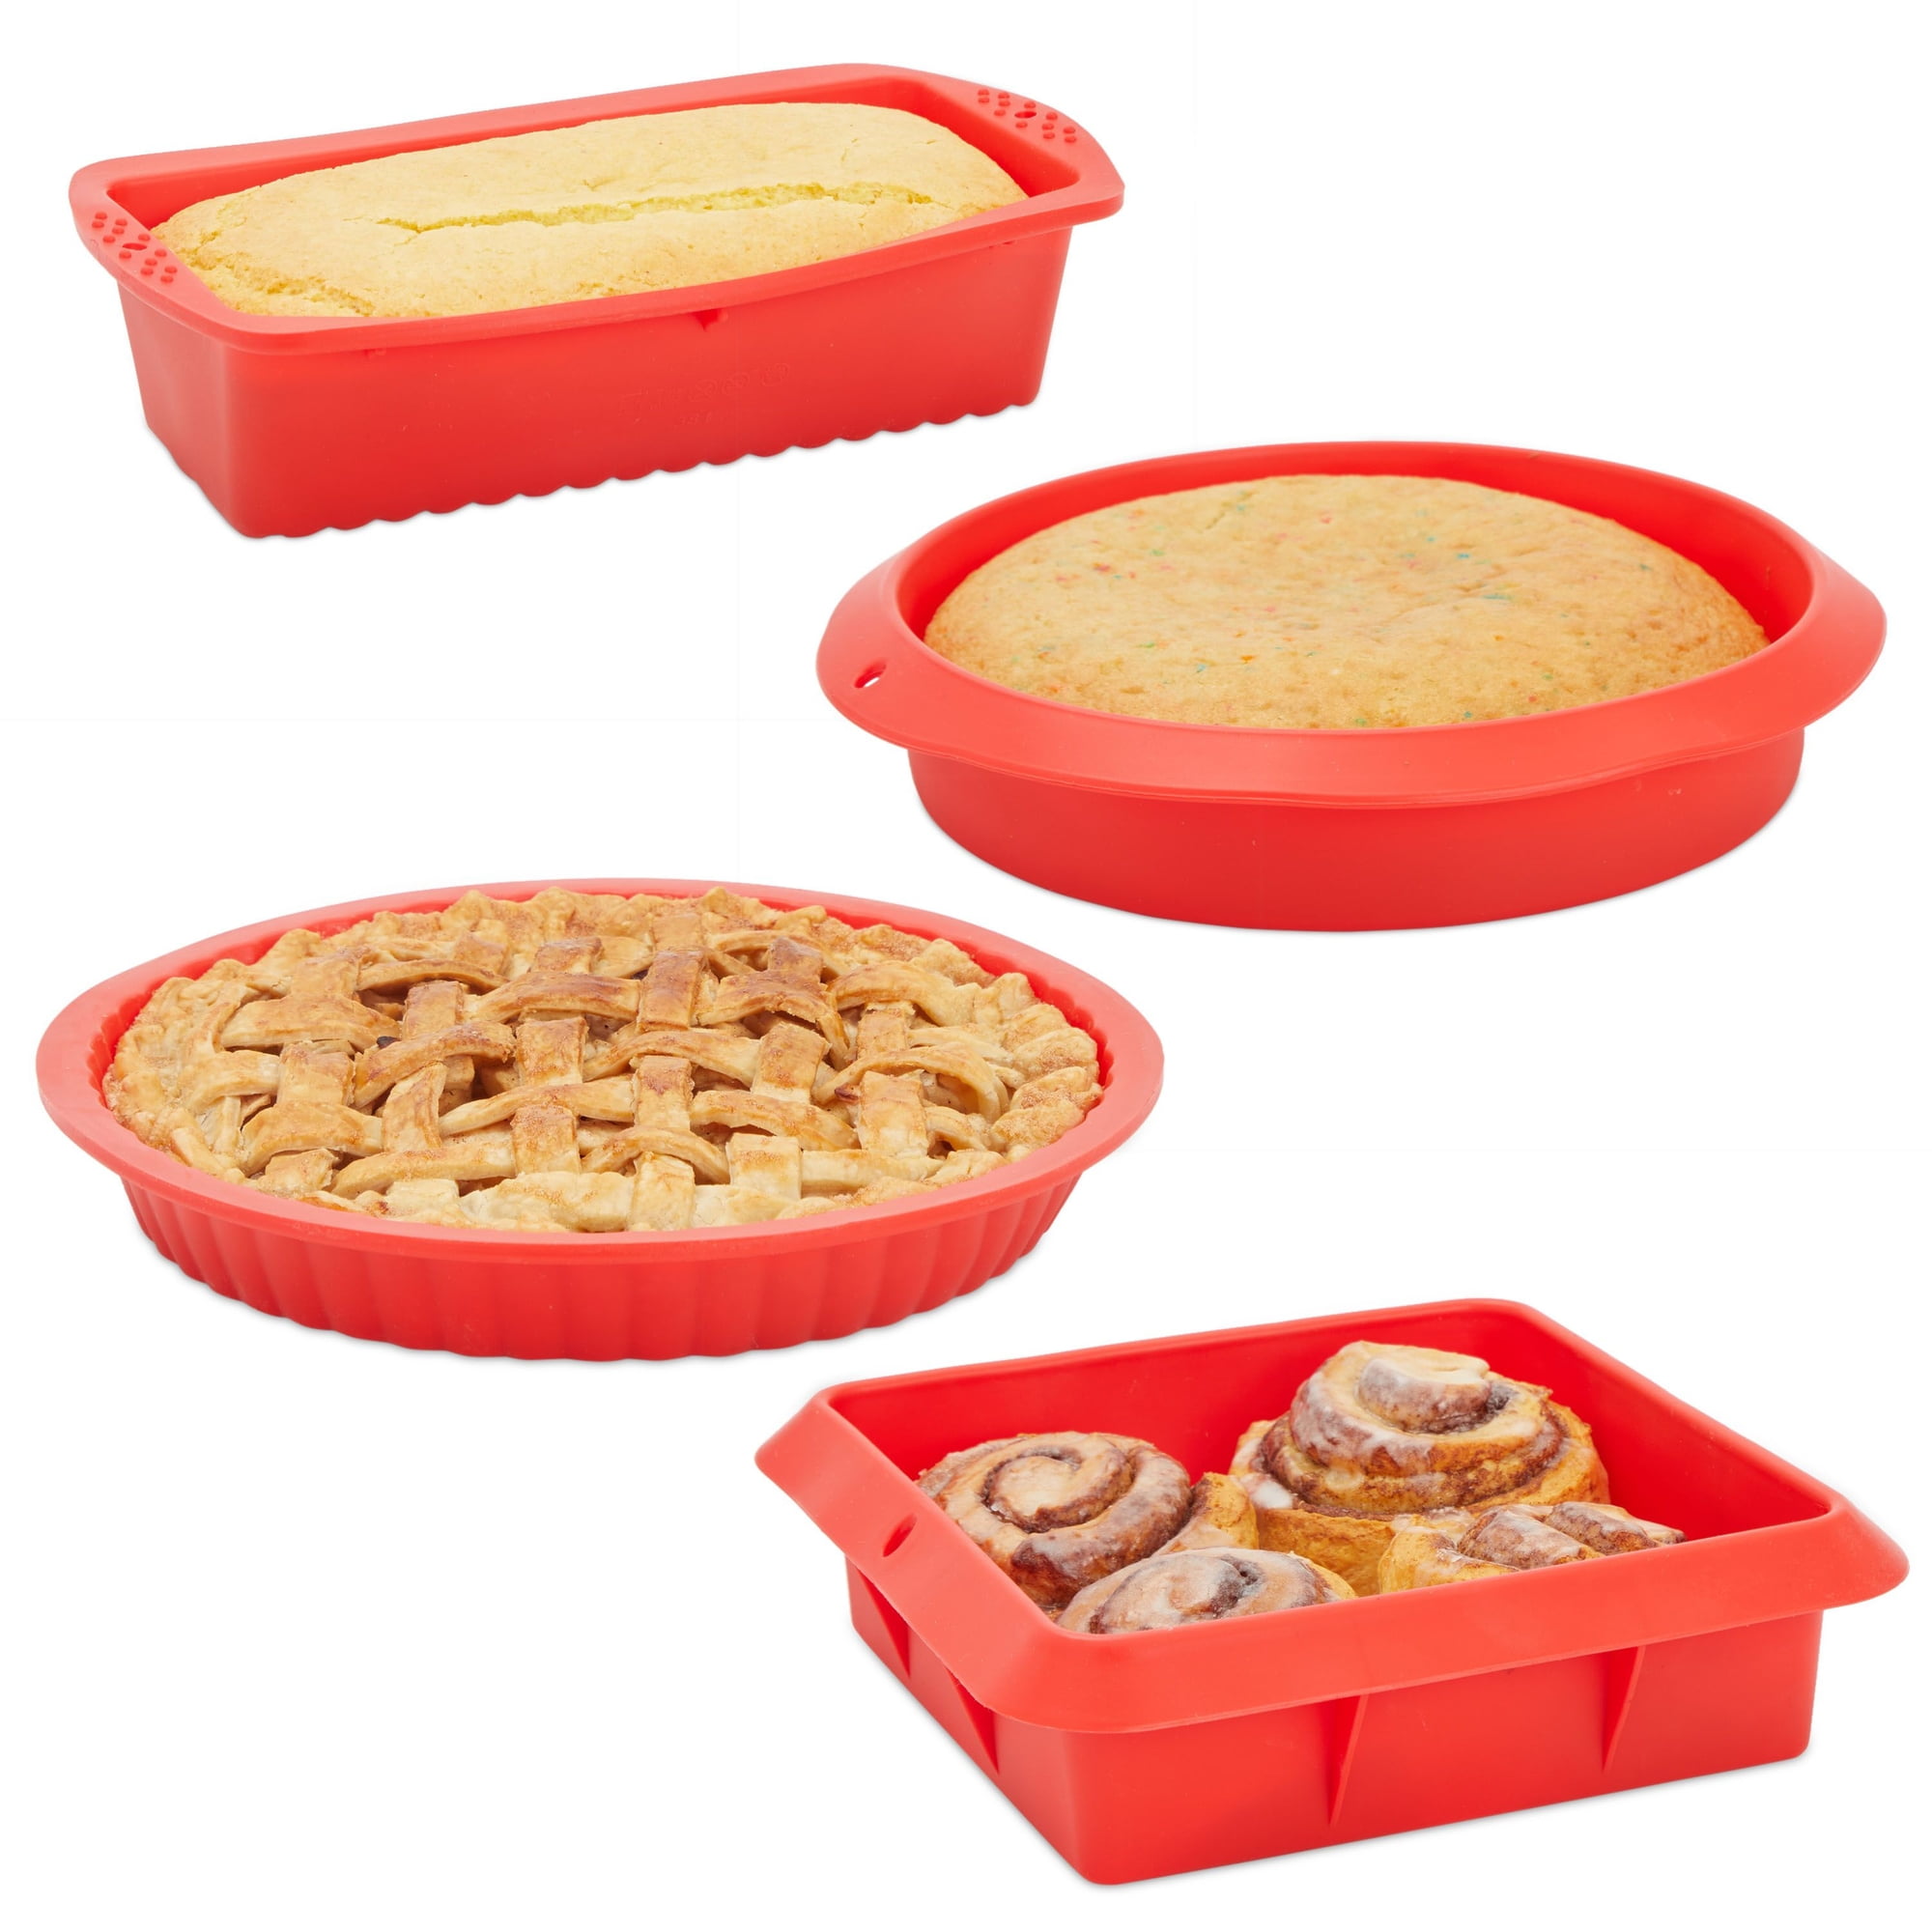 Baker's Advantage® Roshco® 5 PC Non-Stick Red Silicone Bakeware Baking Set  -  Log Cabin Decor